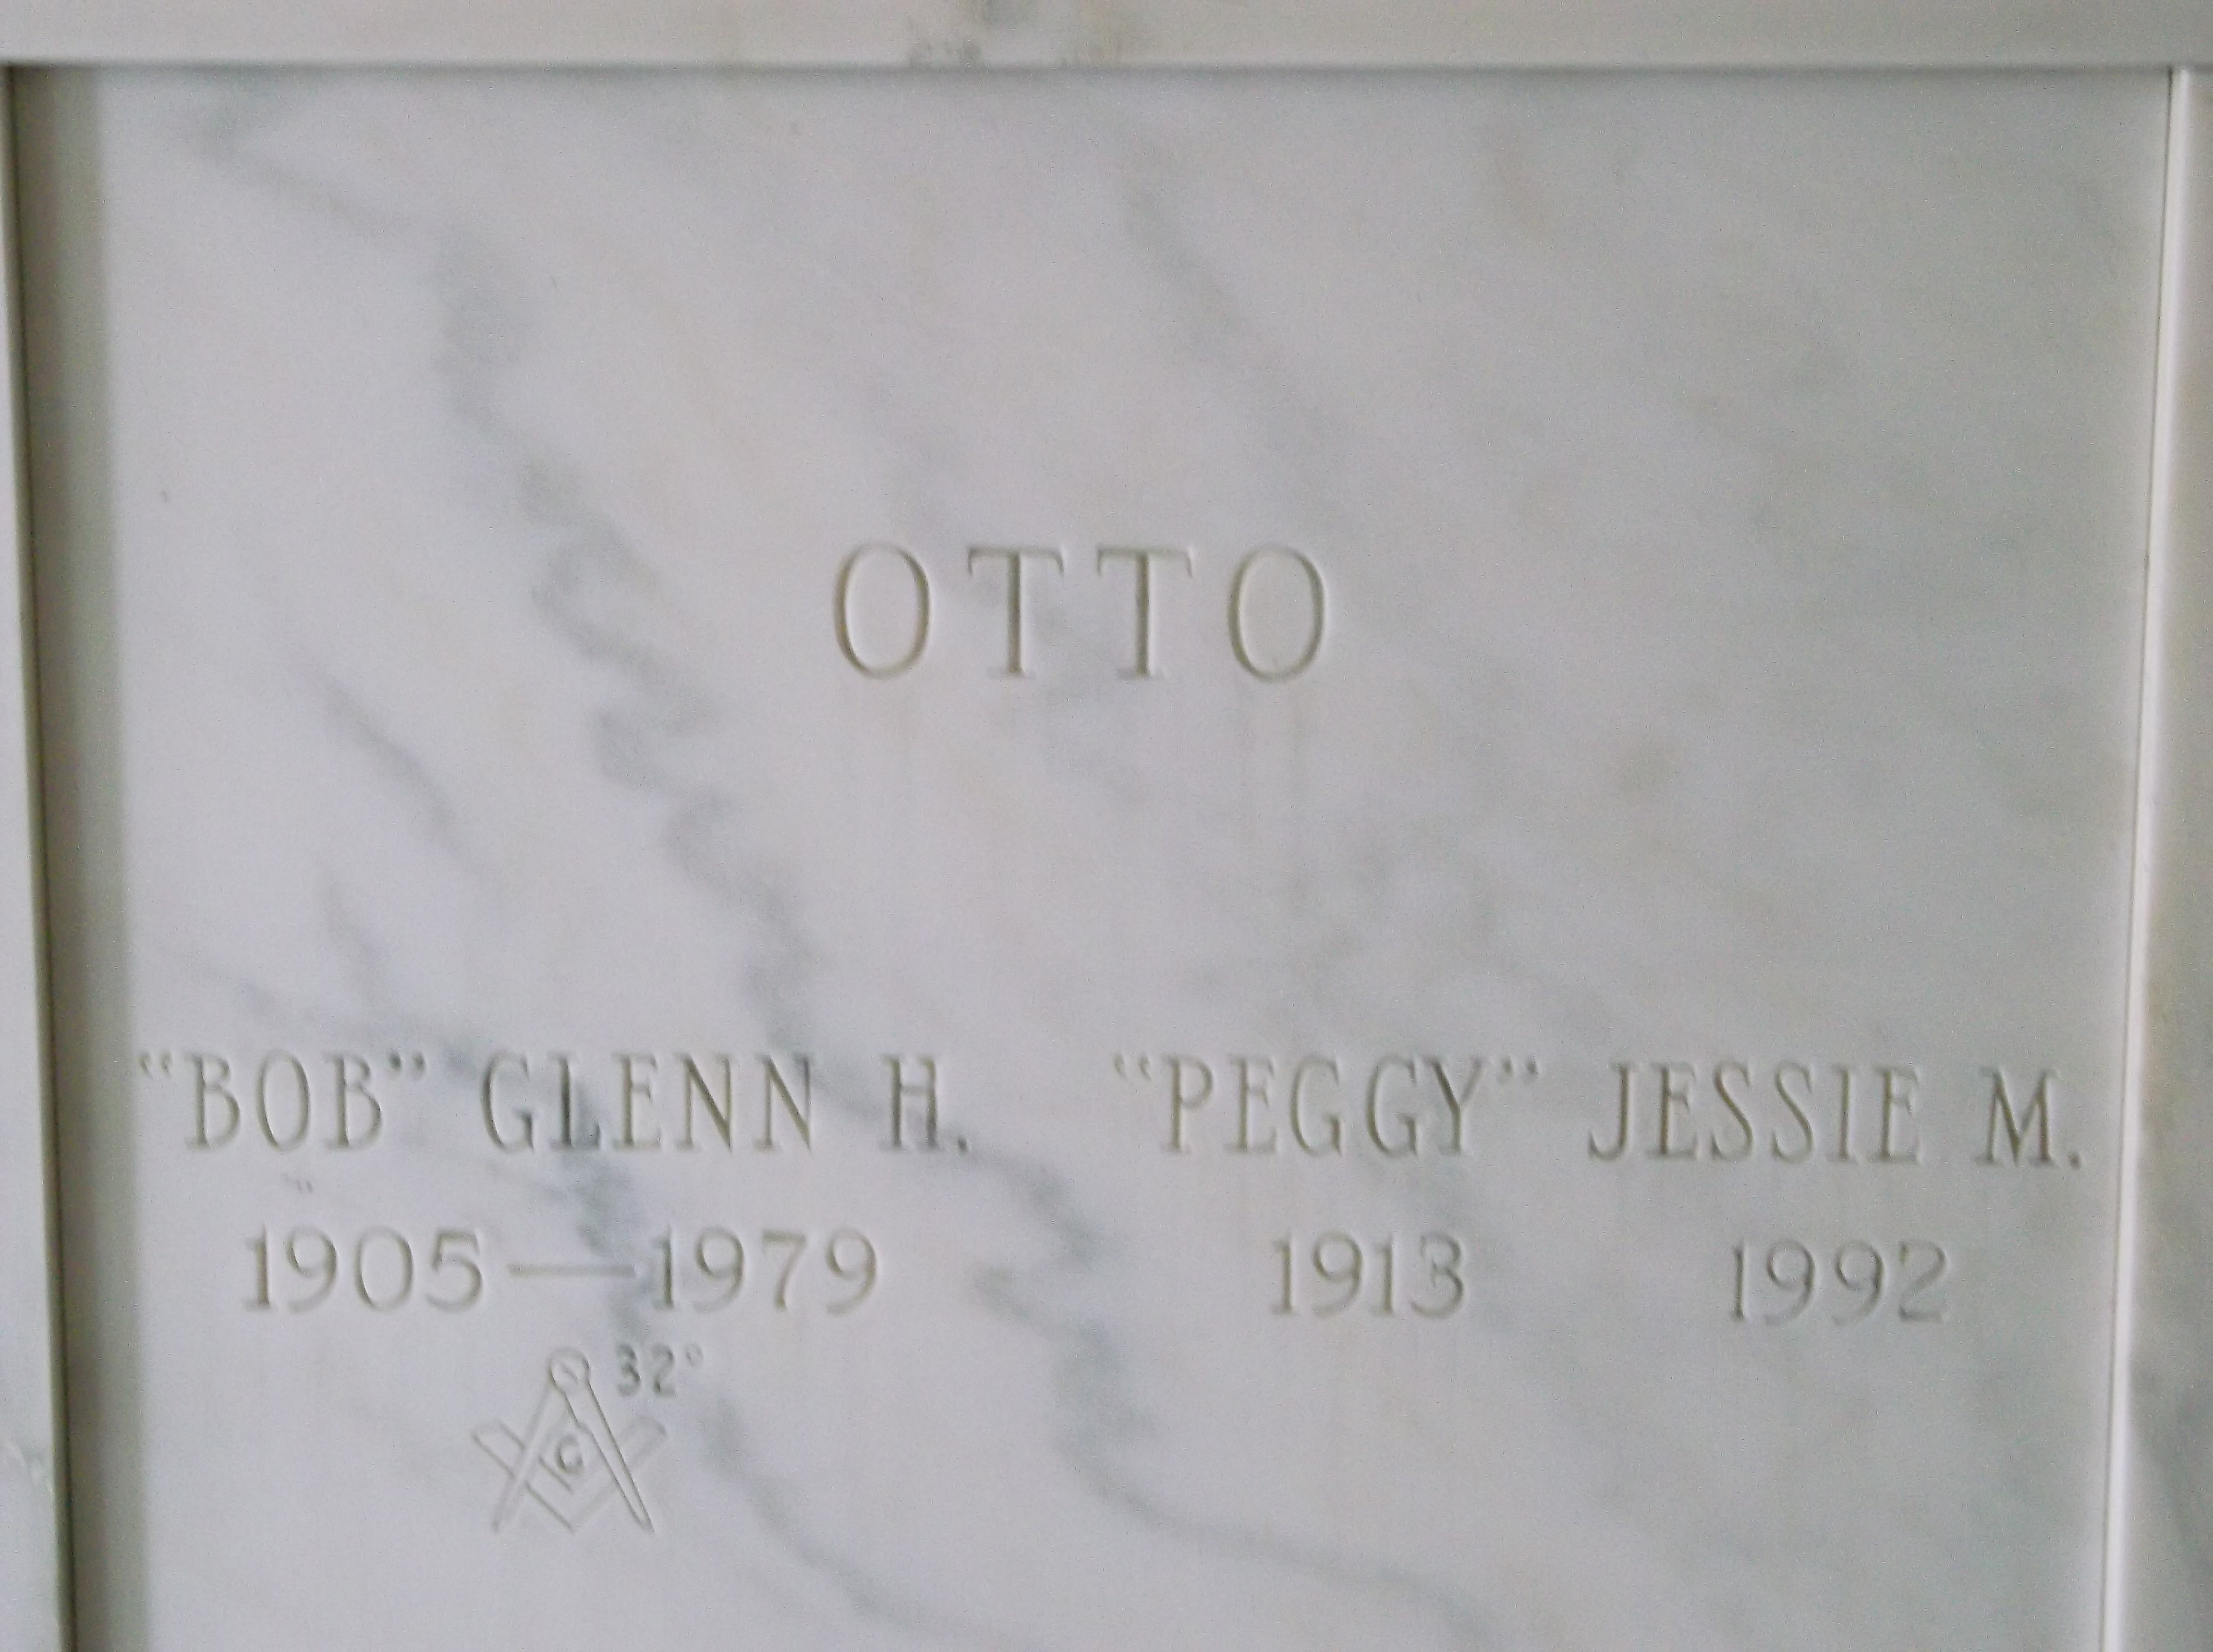 Jessie M "Peggy" Otto